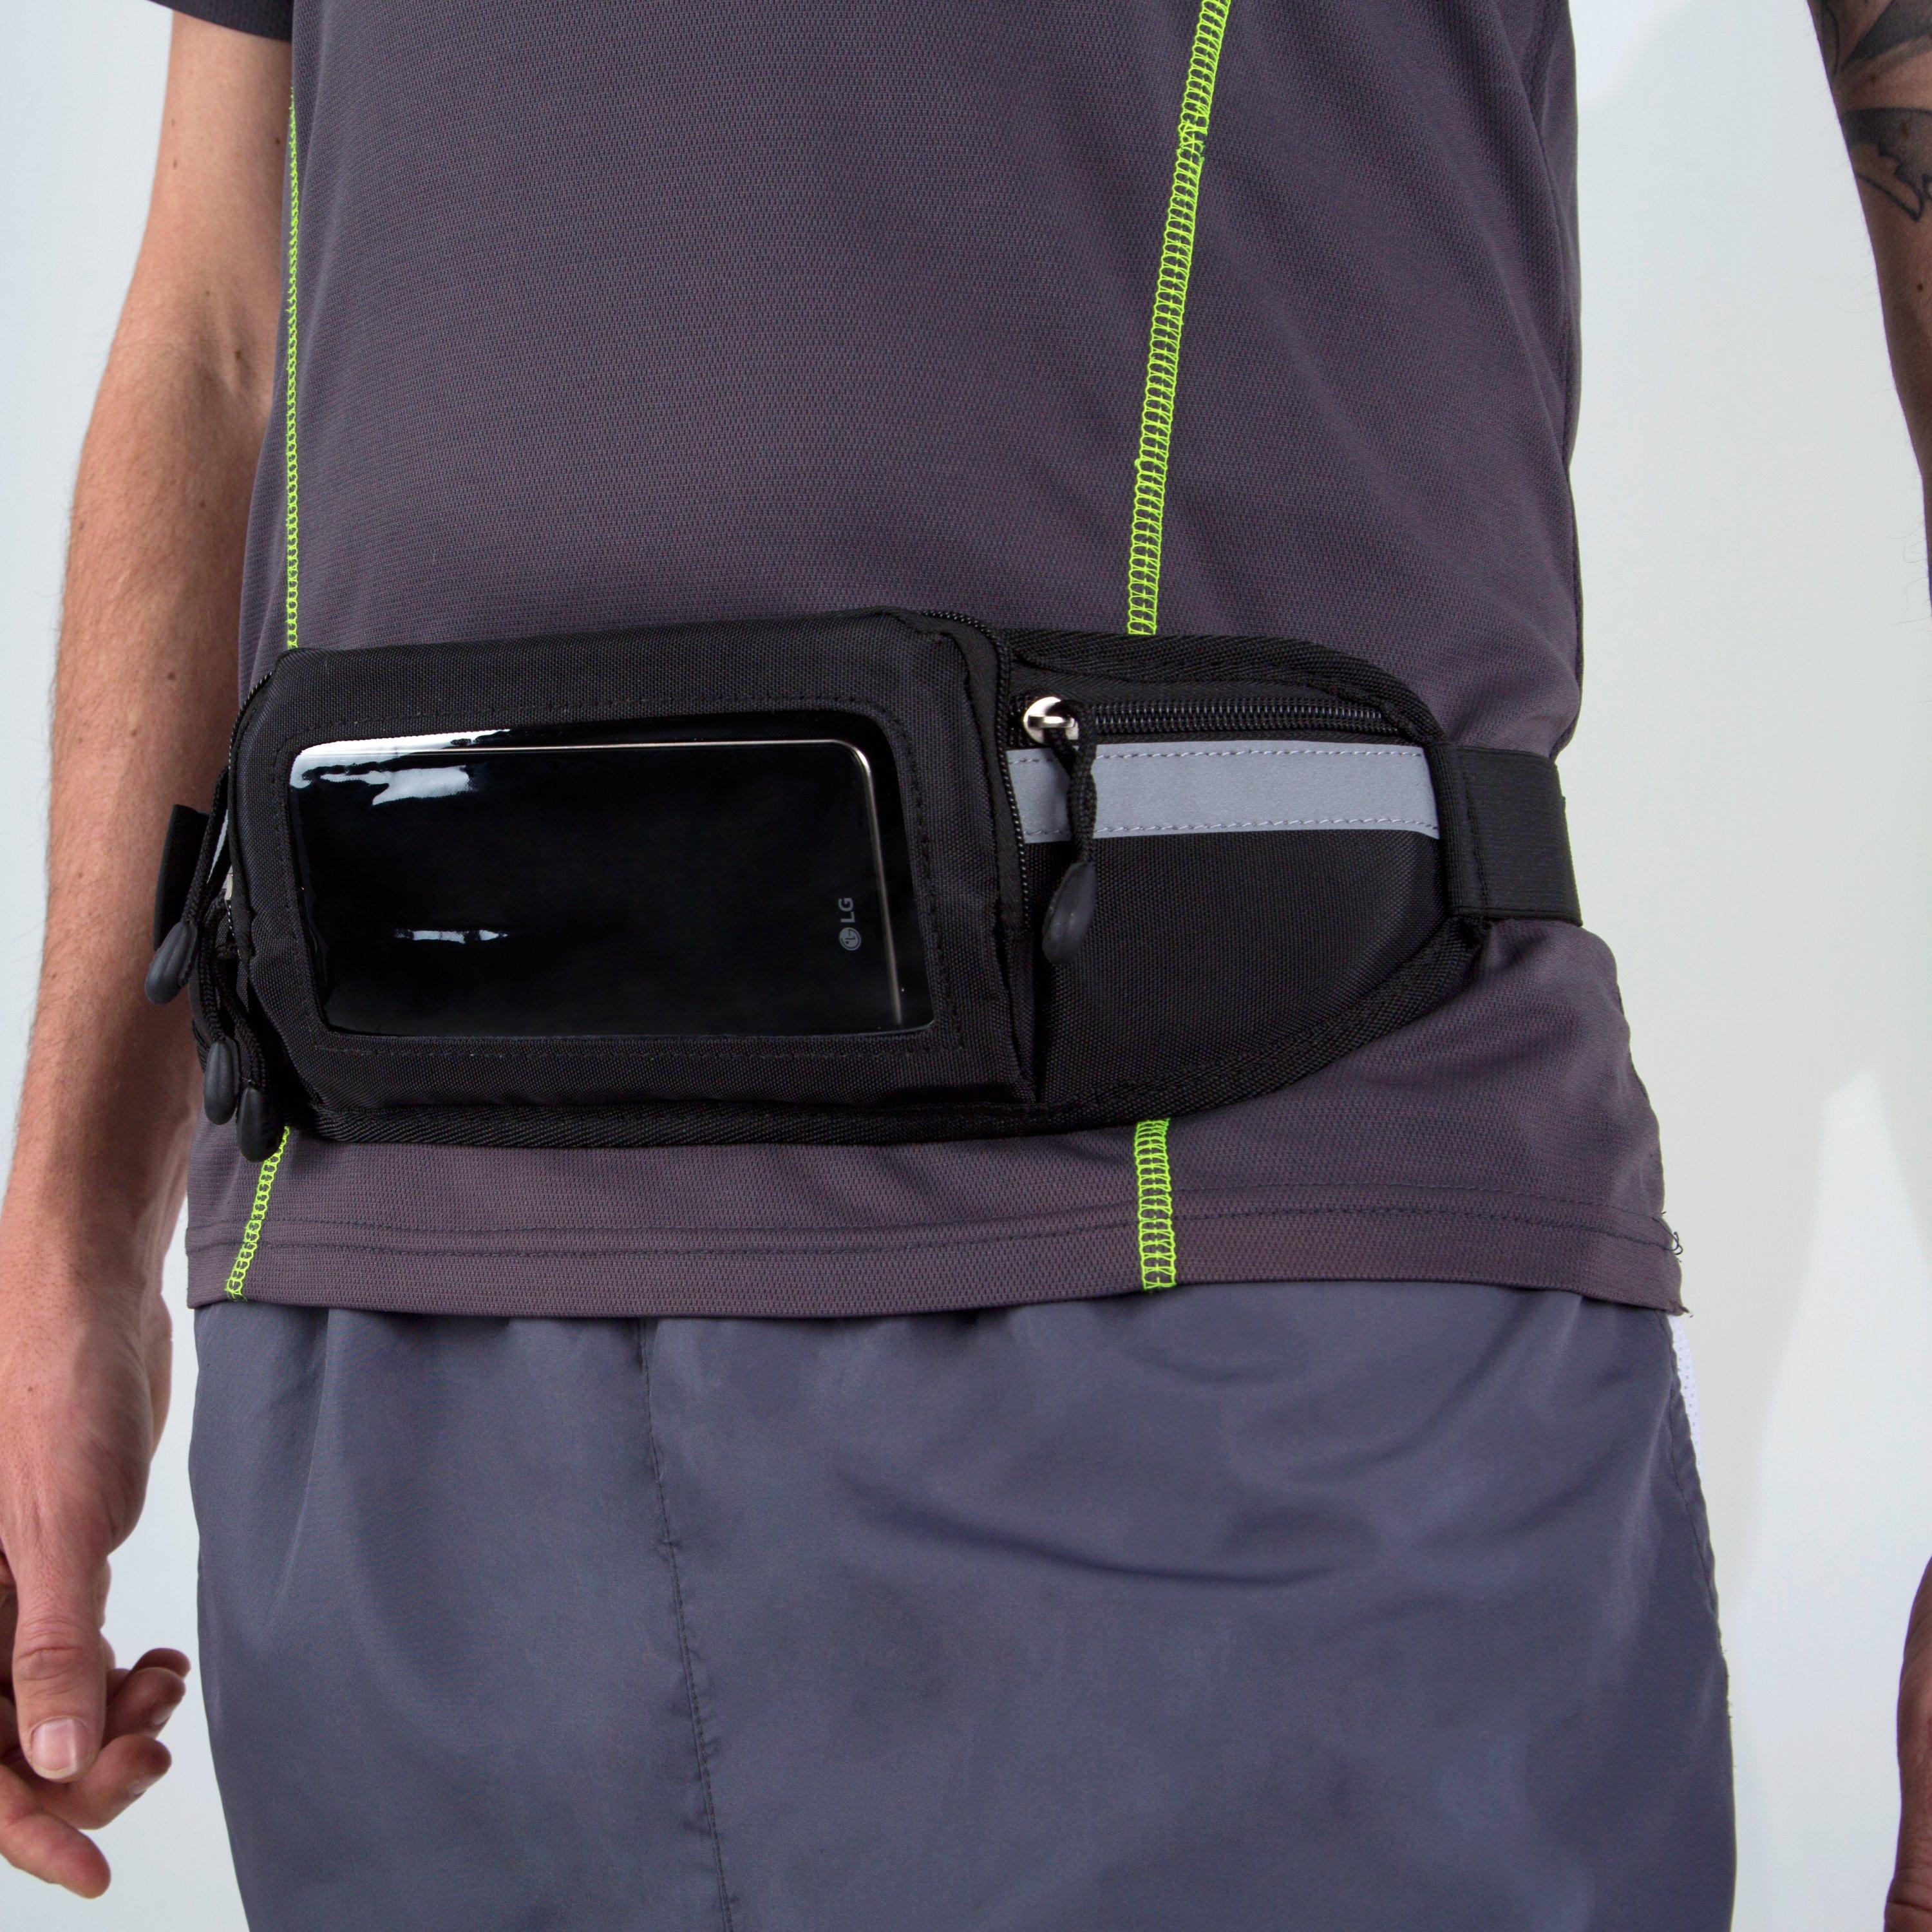 BTR Running Belt / Waist Pack / with Mobile Phone pocket